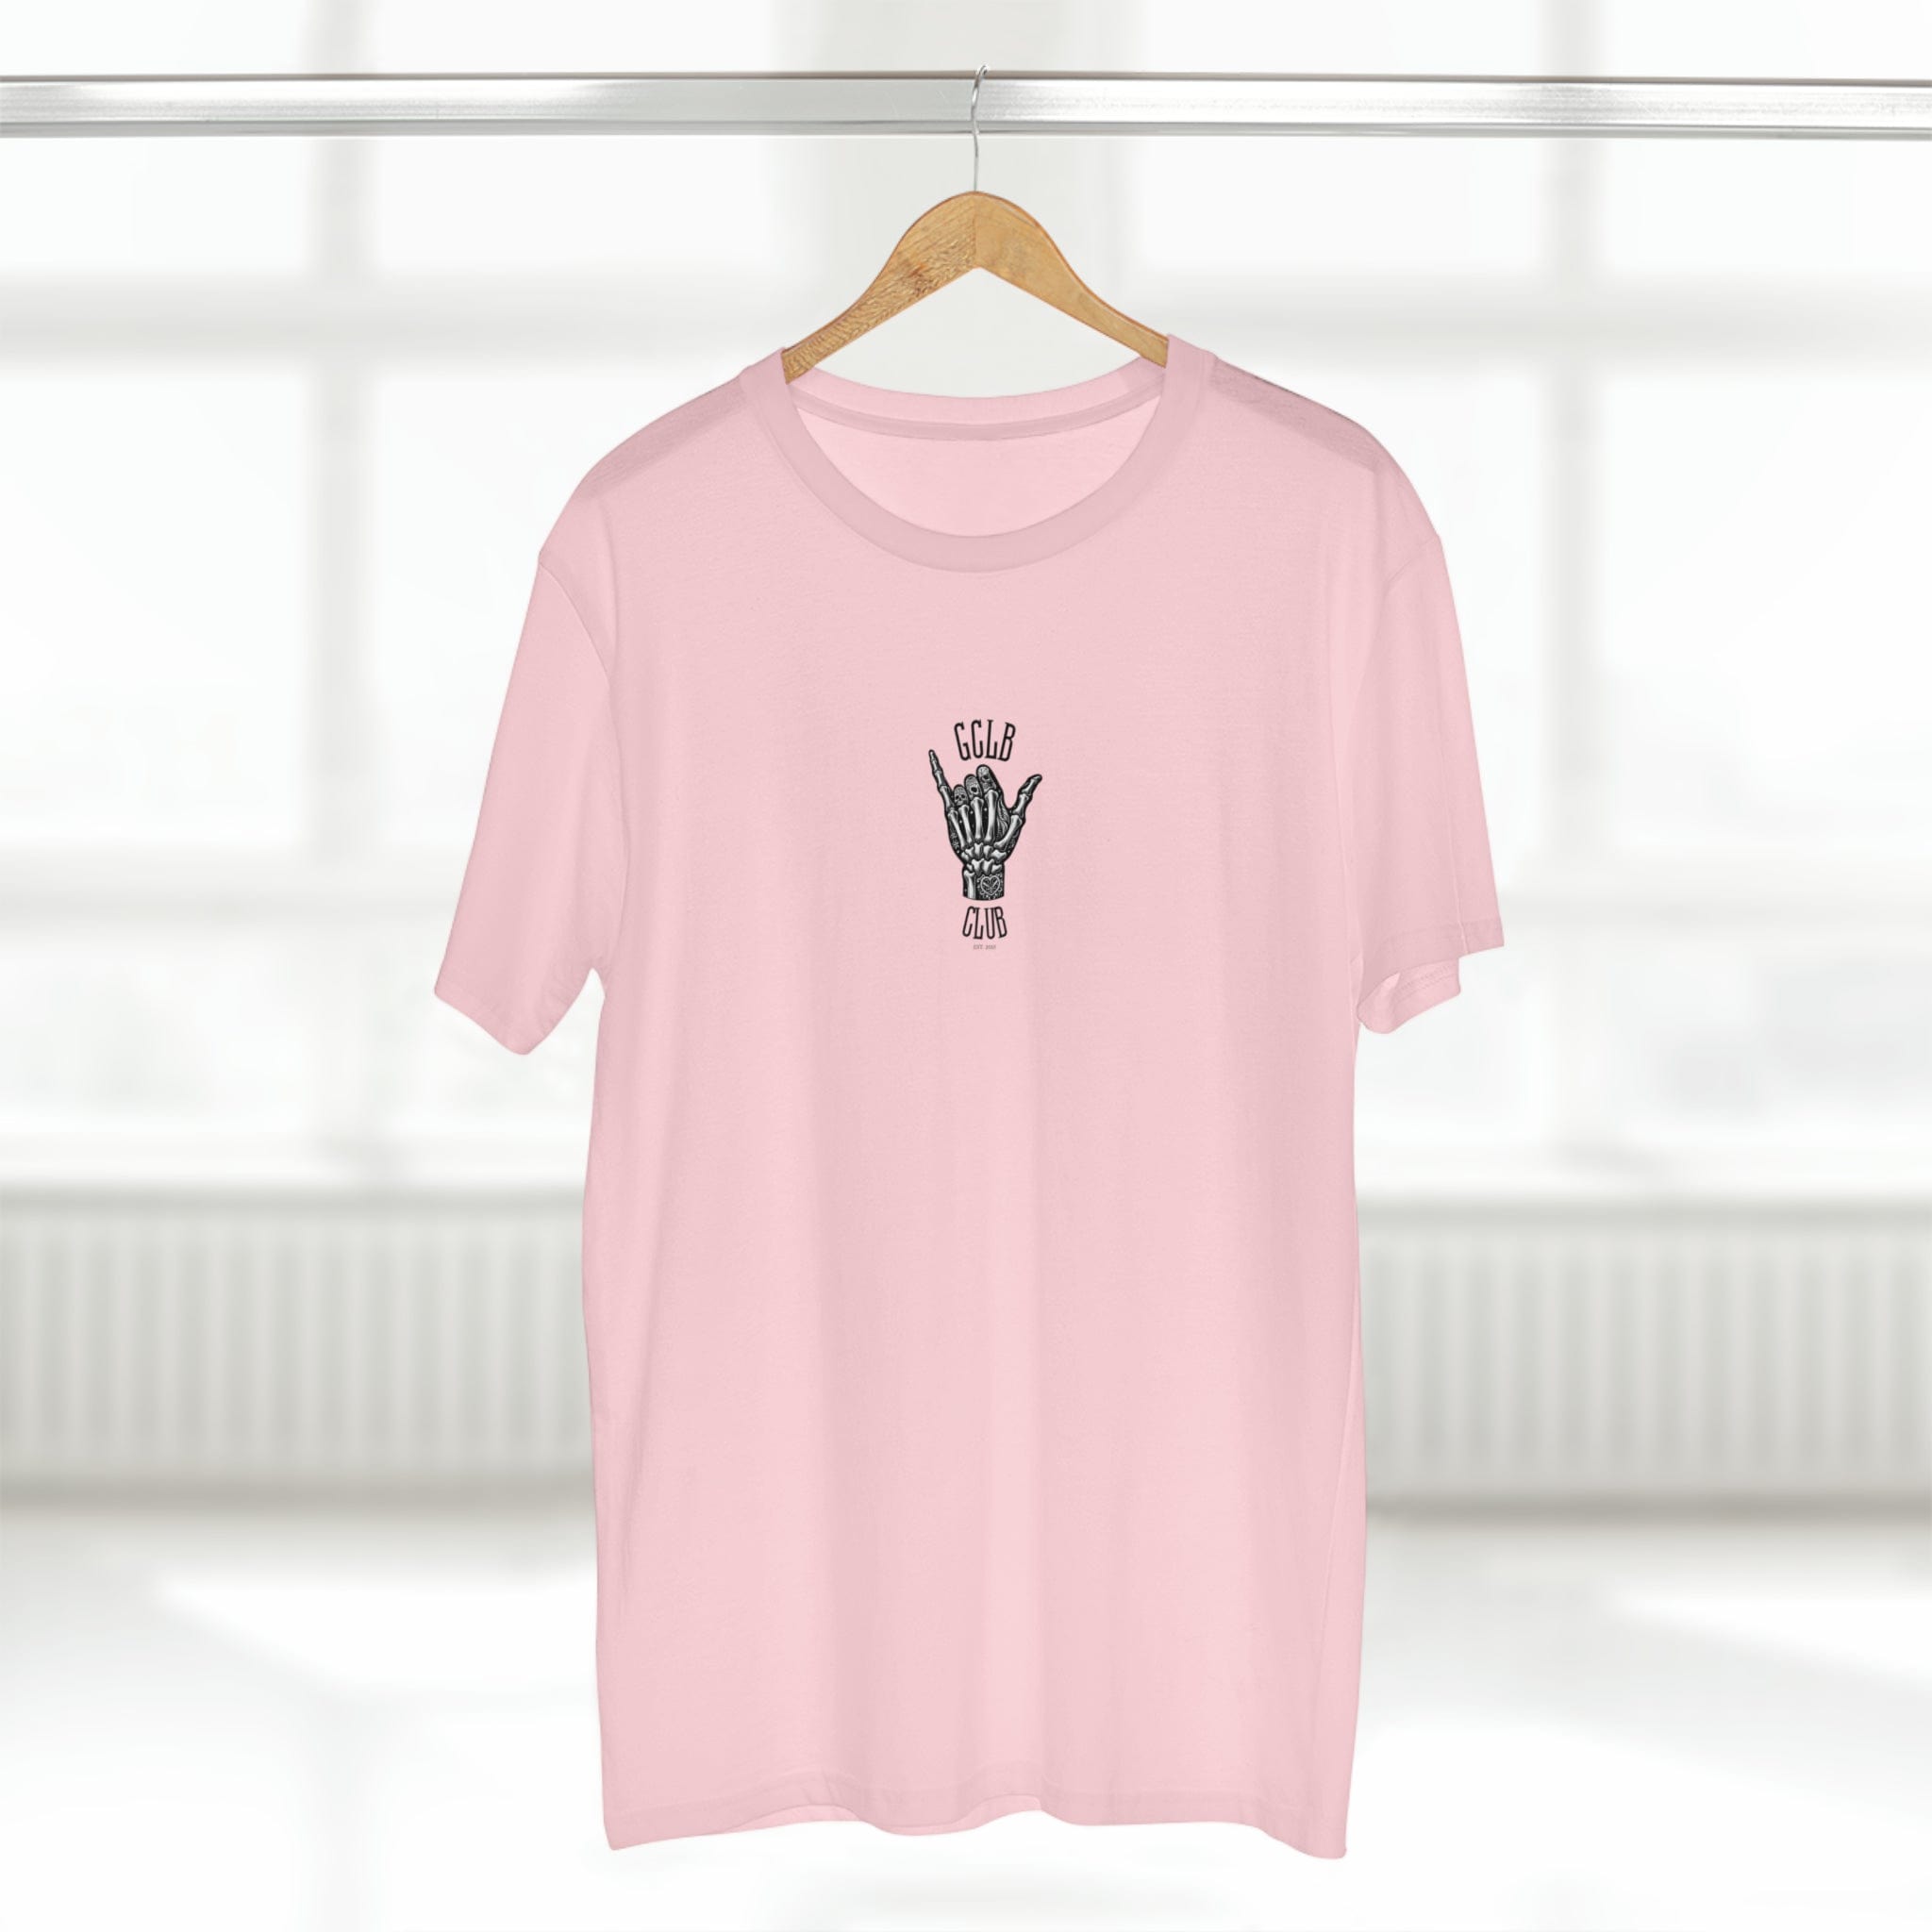 Printify T-Shirt Pink / S GCLB Club Shaka - Standard Tee